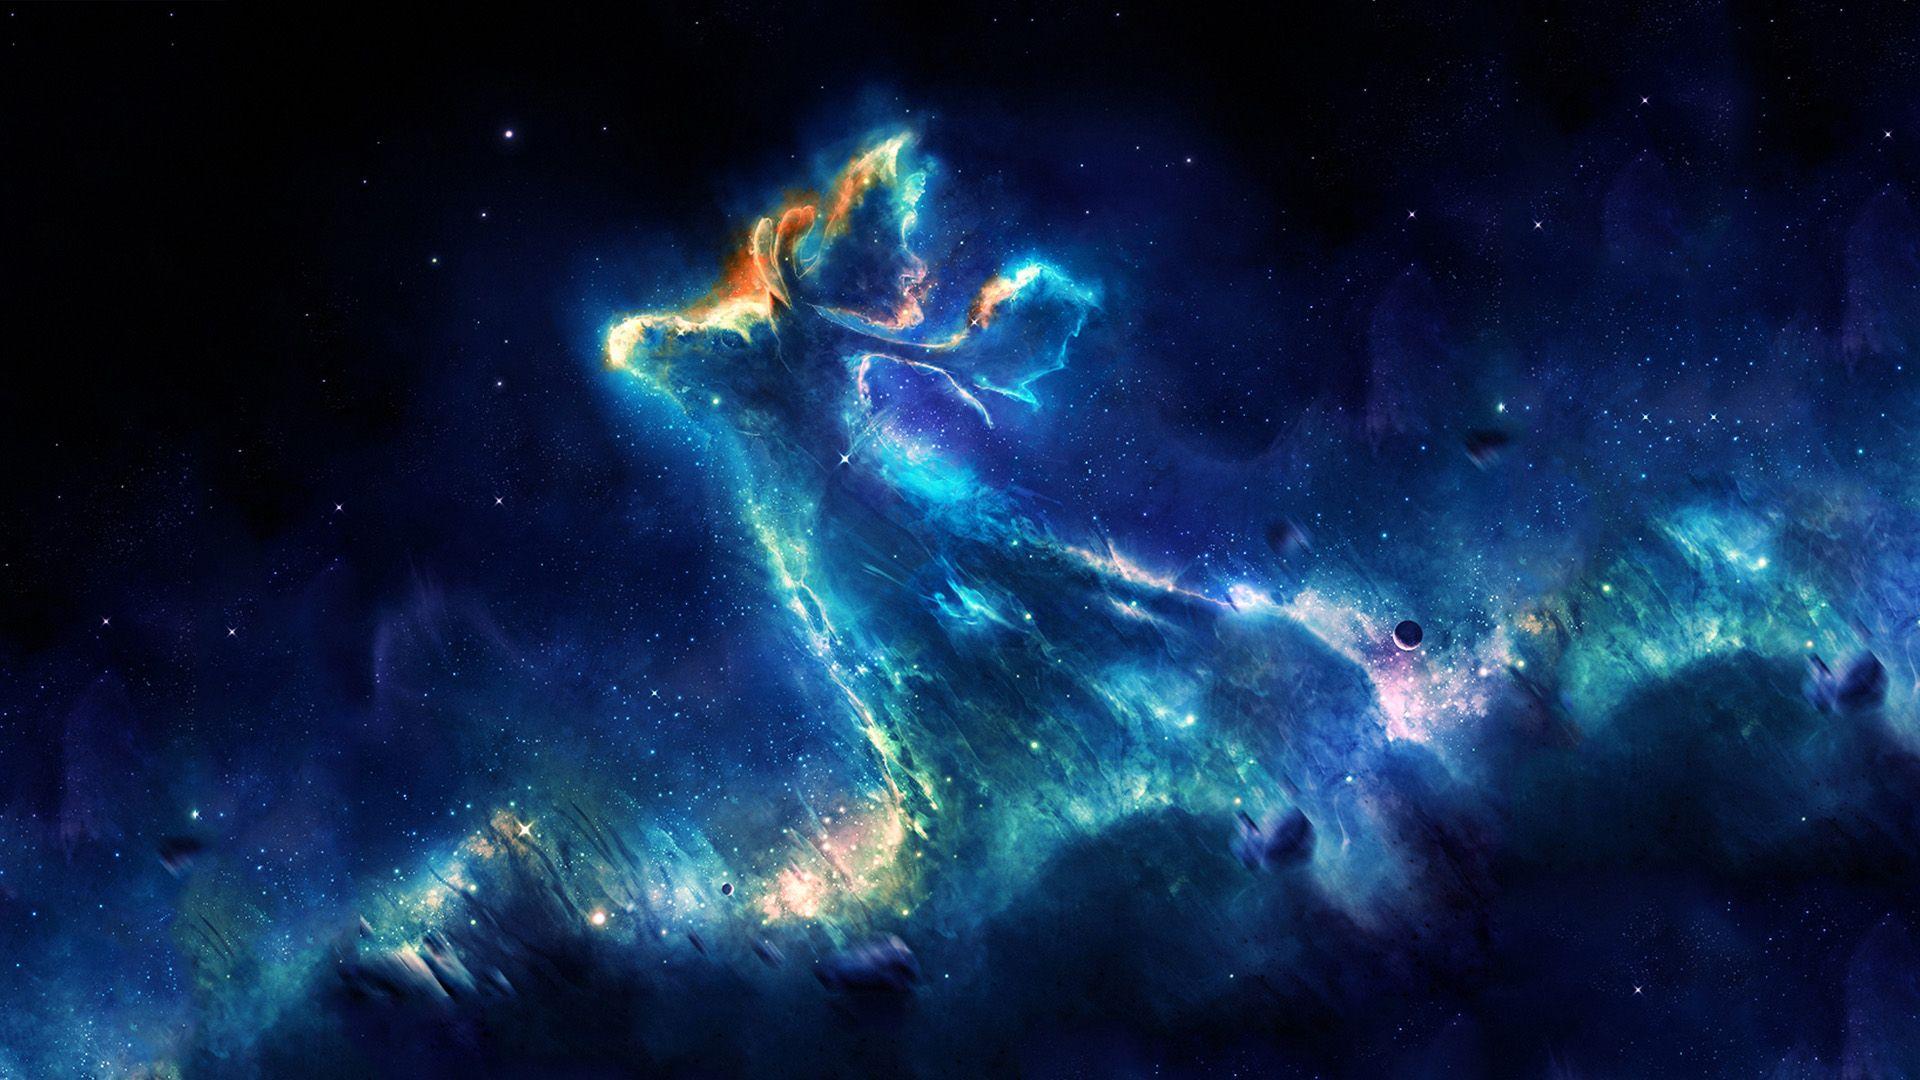 Real Nebula Wallpapers Top Free Real Nebula Backgrounds Wallpaperaccess 6758